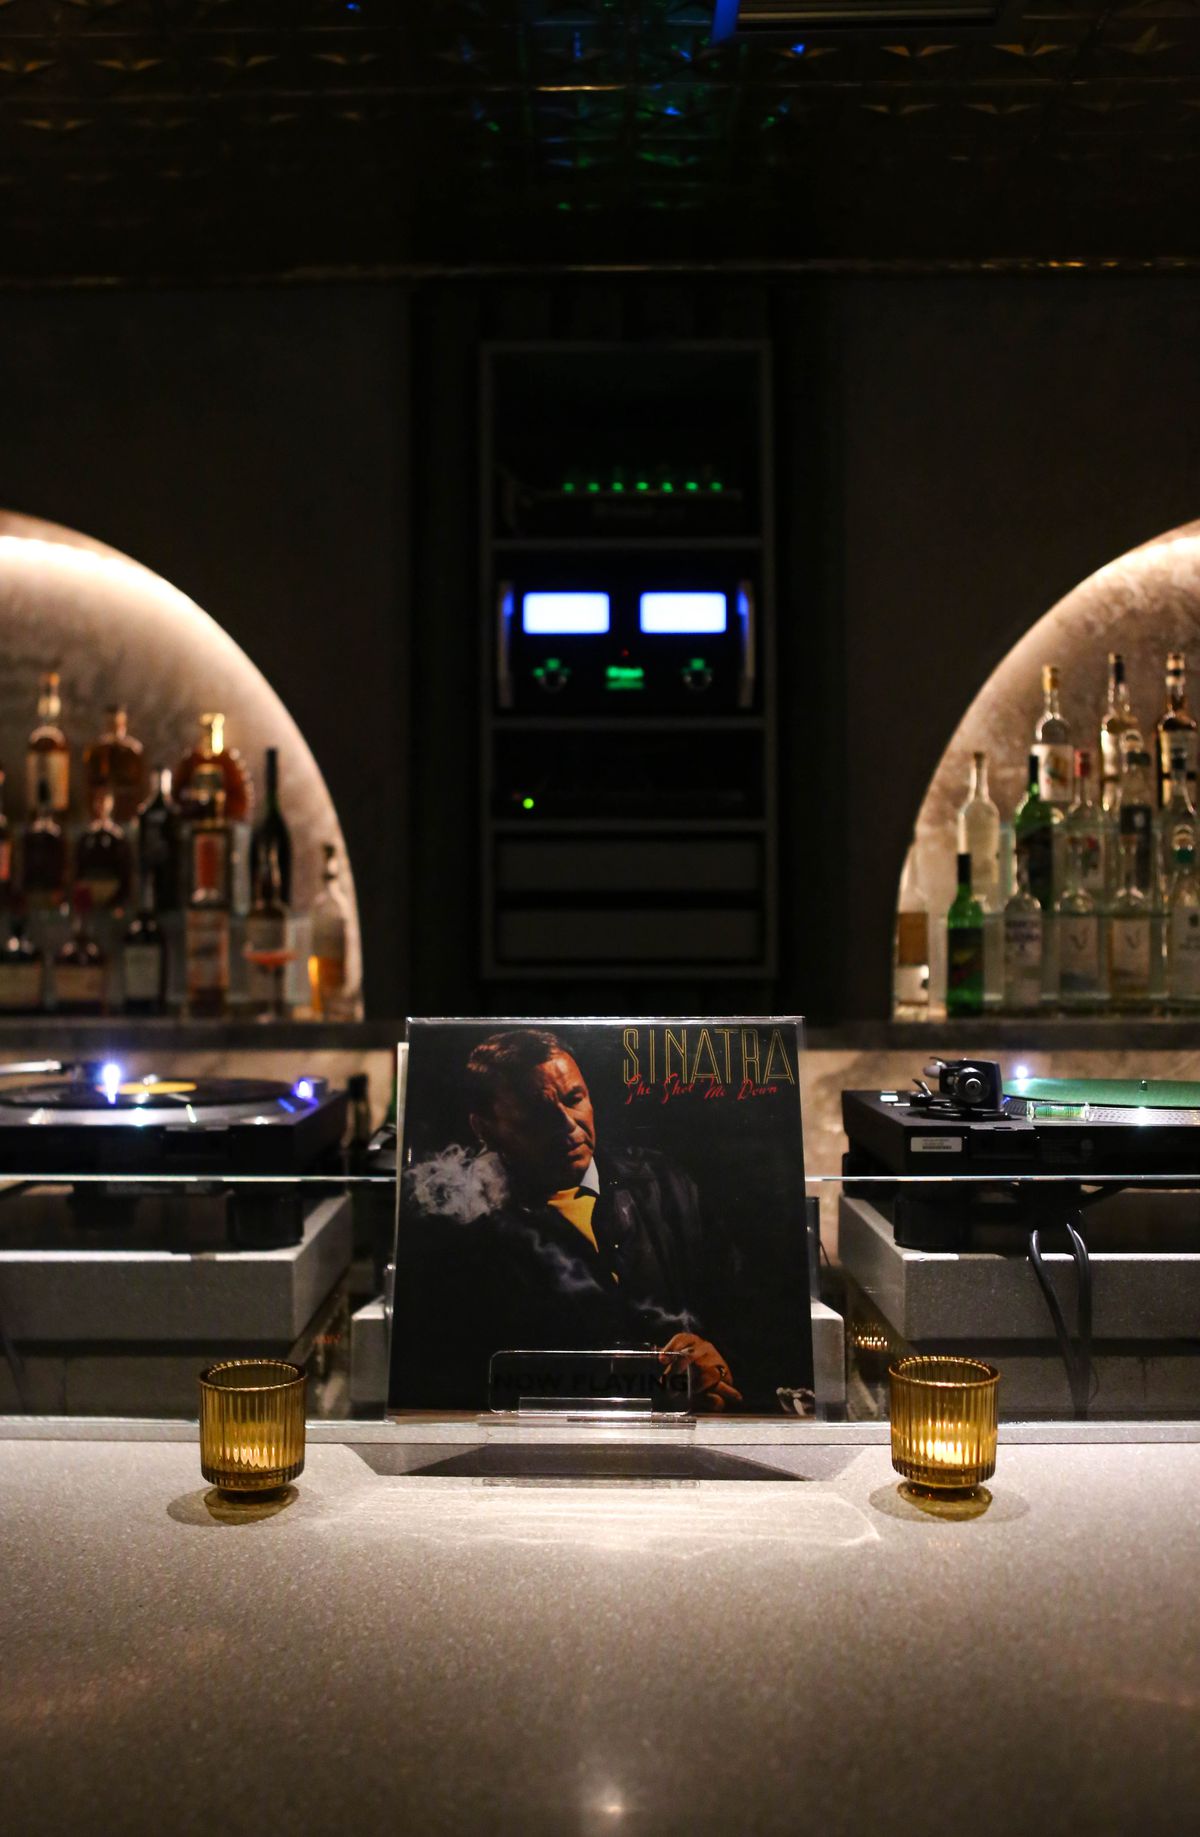 A Frank Sinatra record on a bar.